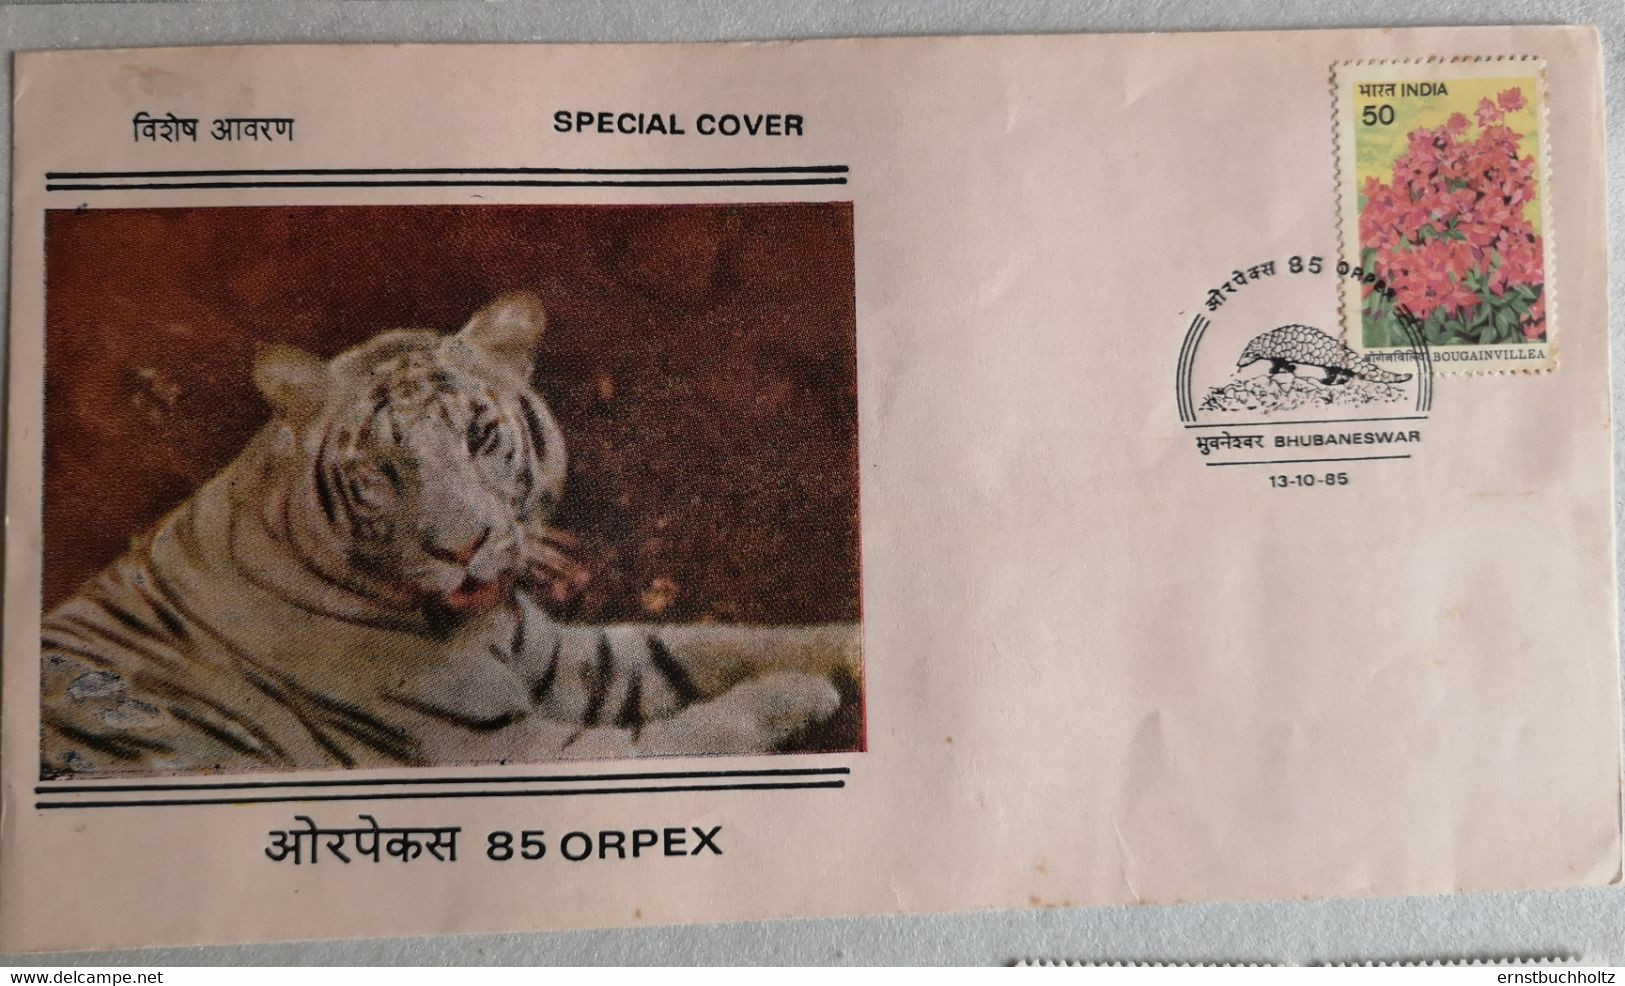 Indien Special Cover 1985mit Tigerbild Und Sonderstempel Pangolin Schuppentier - Unclassified